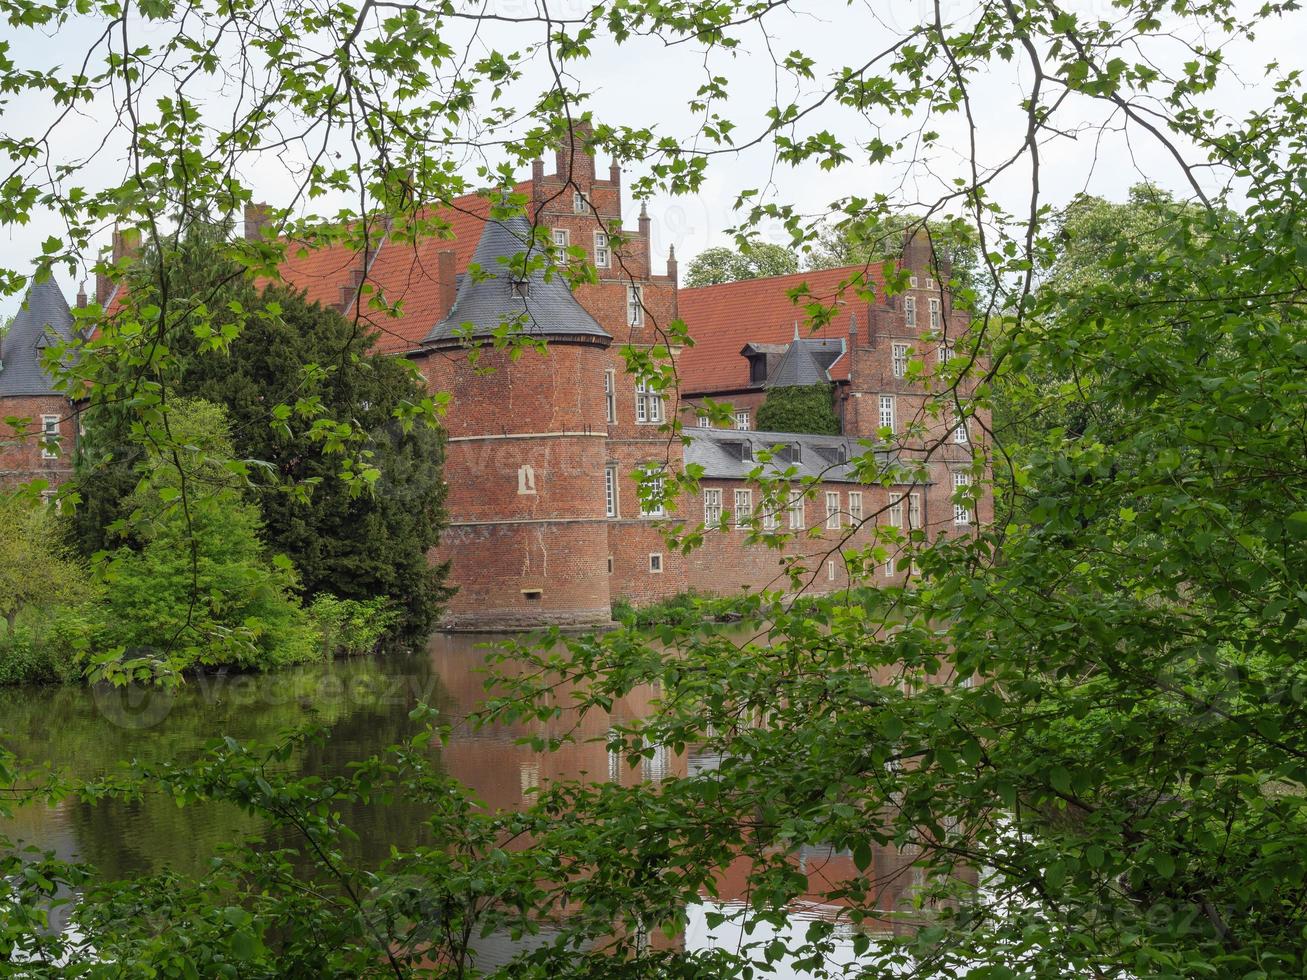 the castle of Herten photo